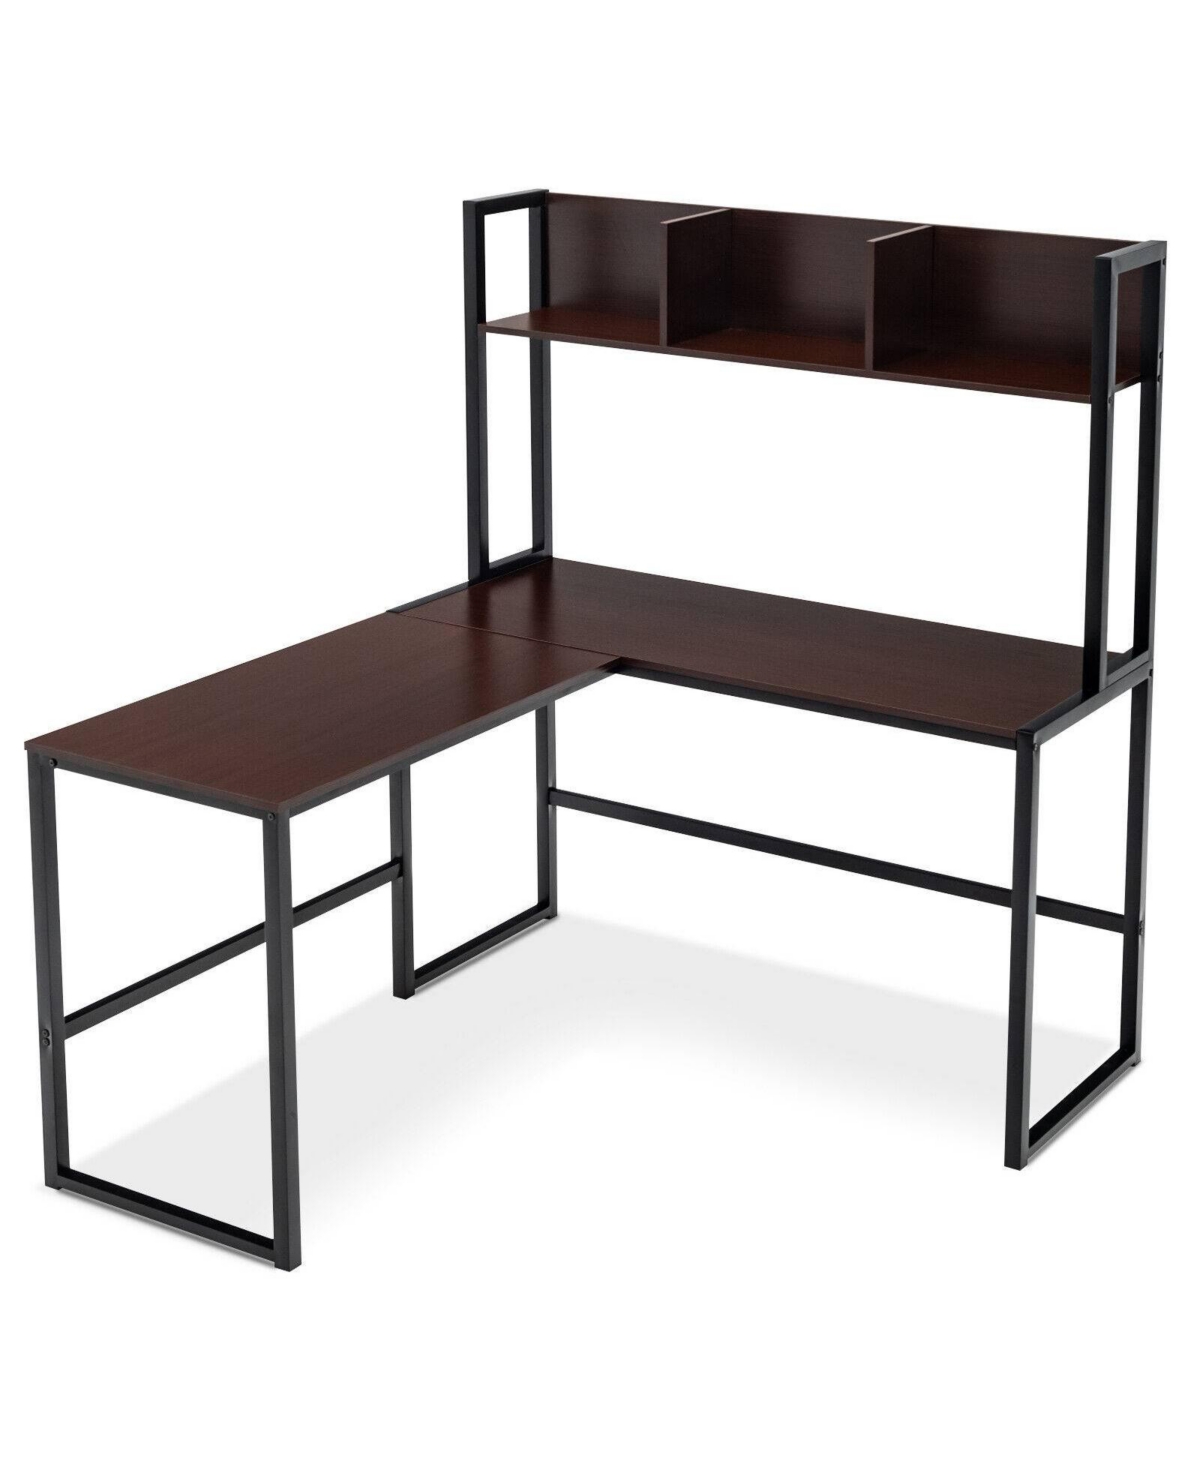 Slickblue Reversible L-shaped Corner Desk With Storage Bookshelf In Brown